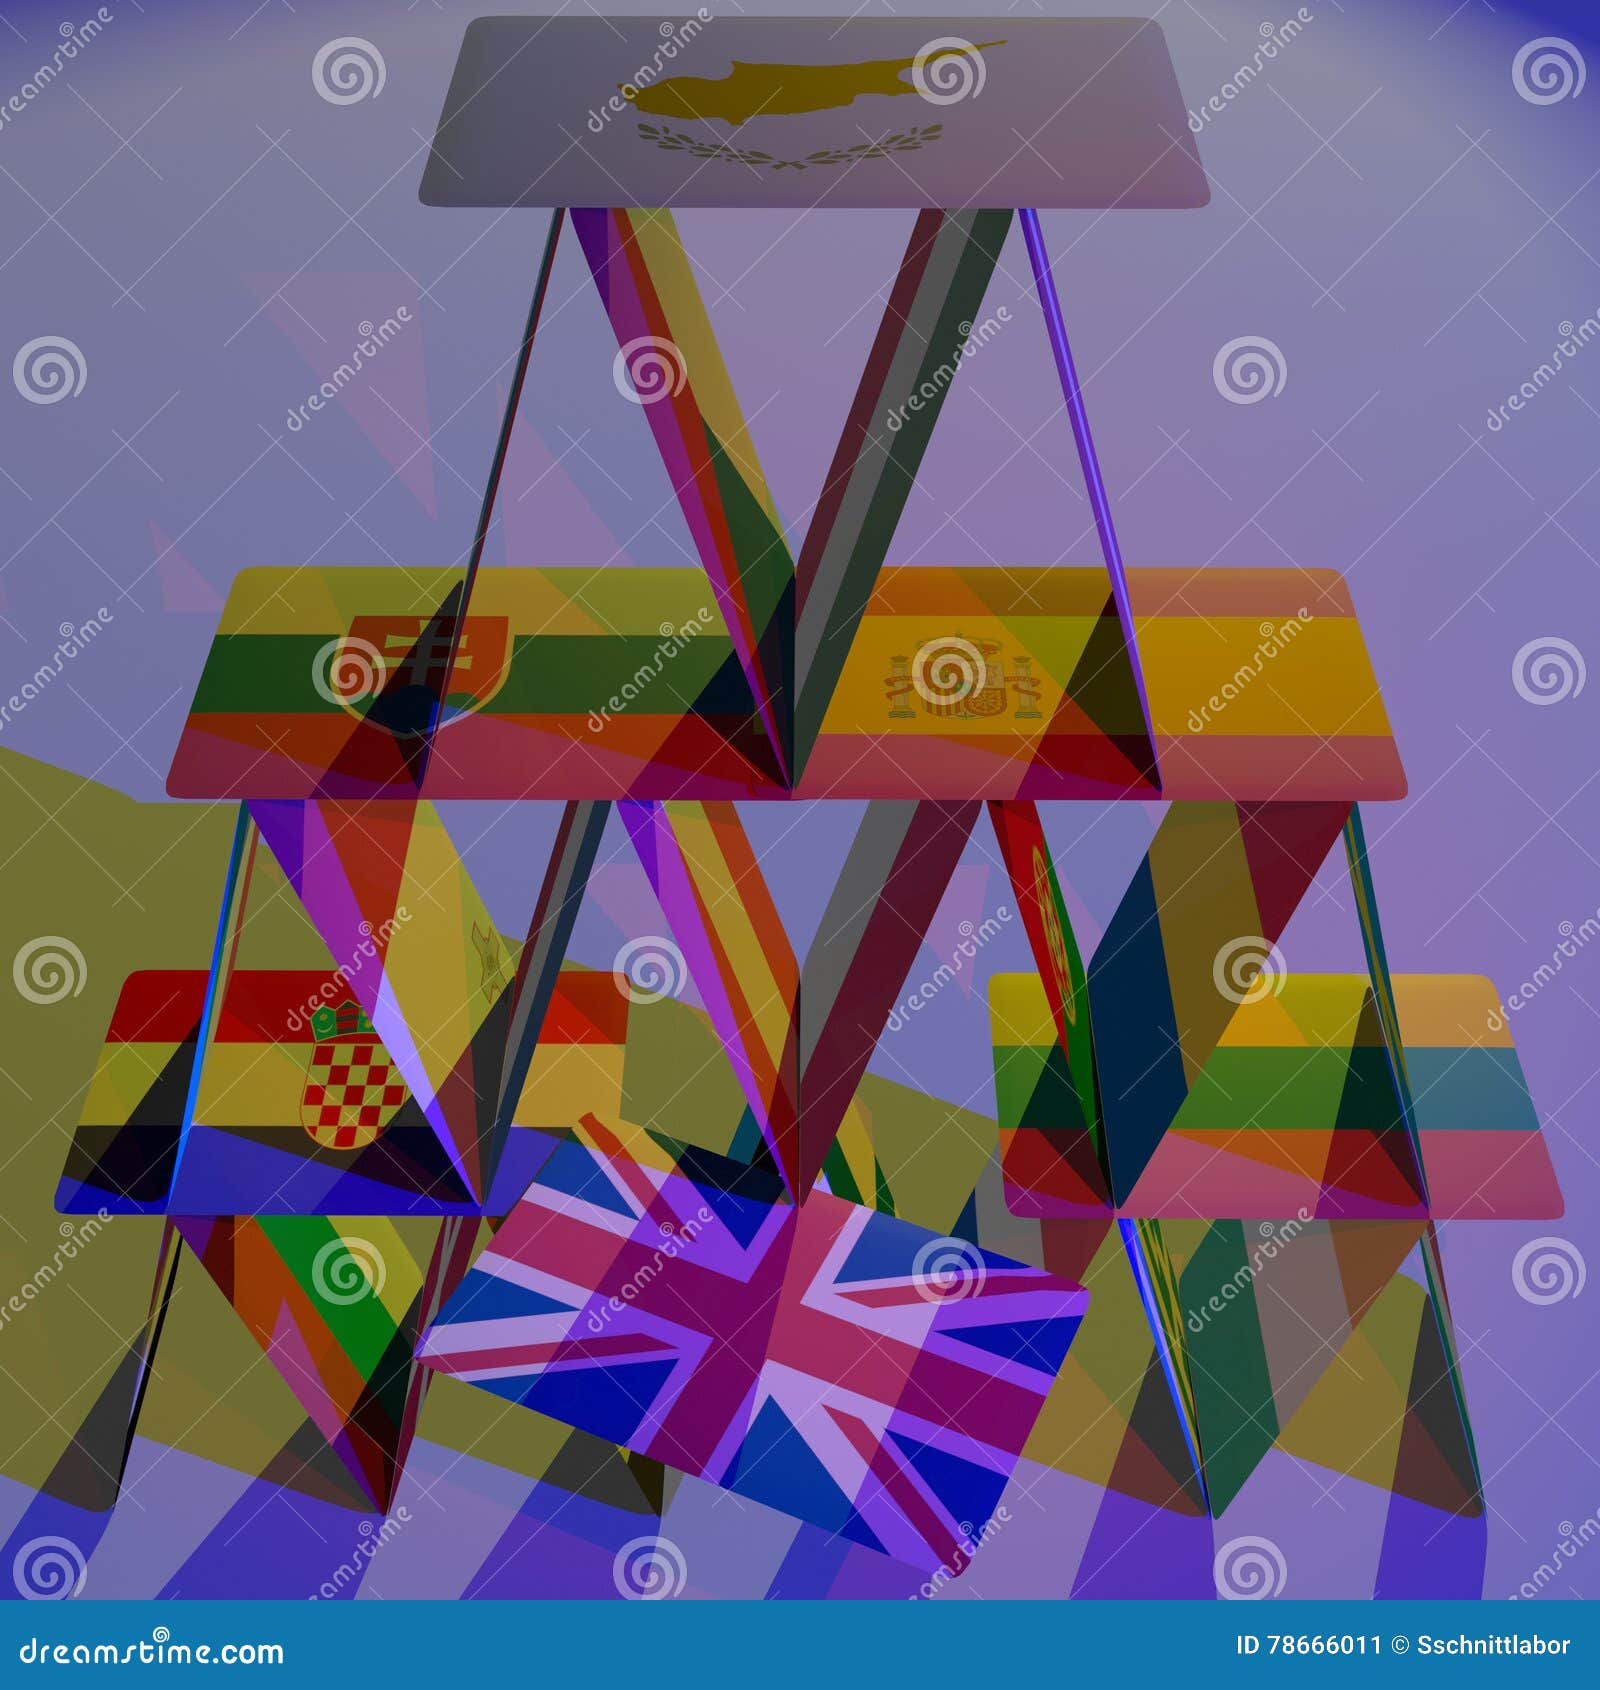 Europe Brexit House Of Cards Collapse Danger Disaster Cgi 3d Eu Stock Illustration